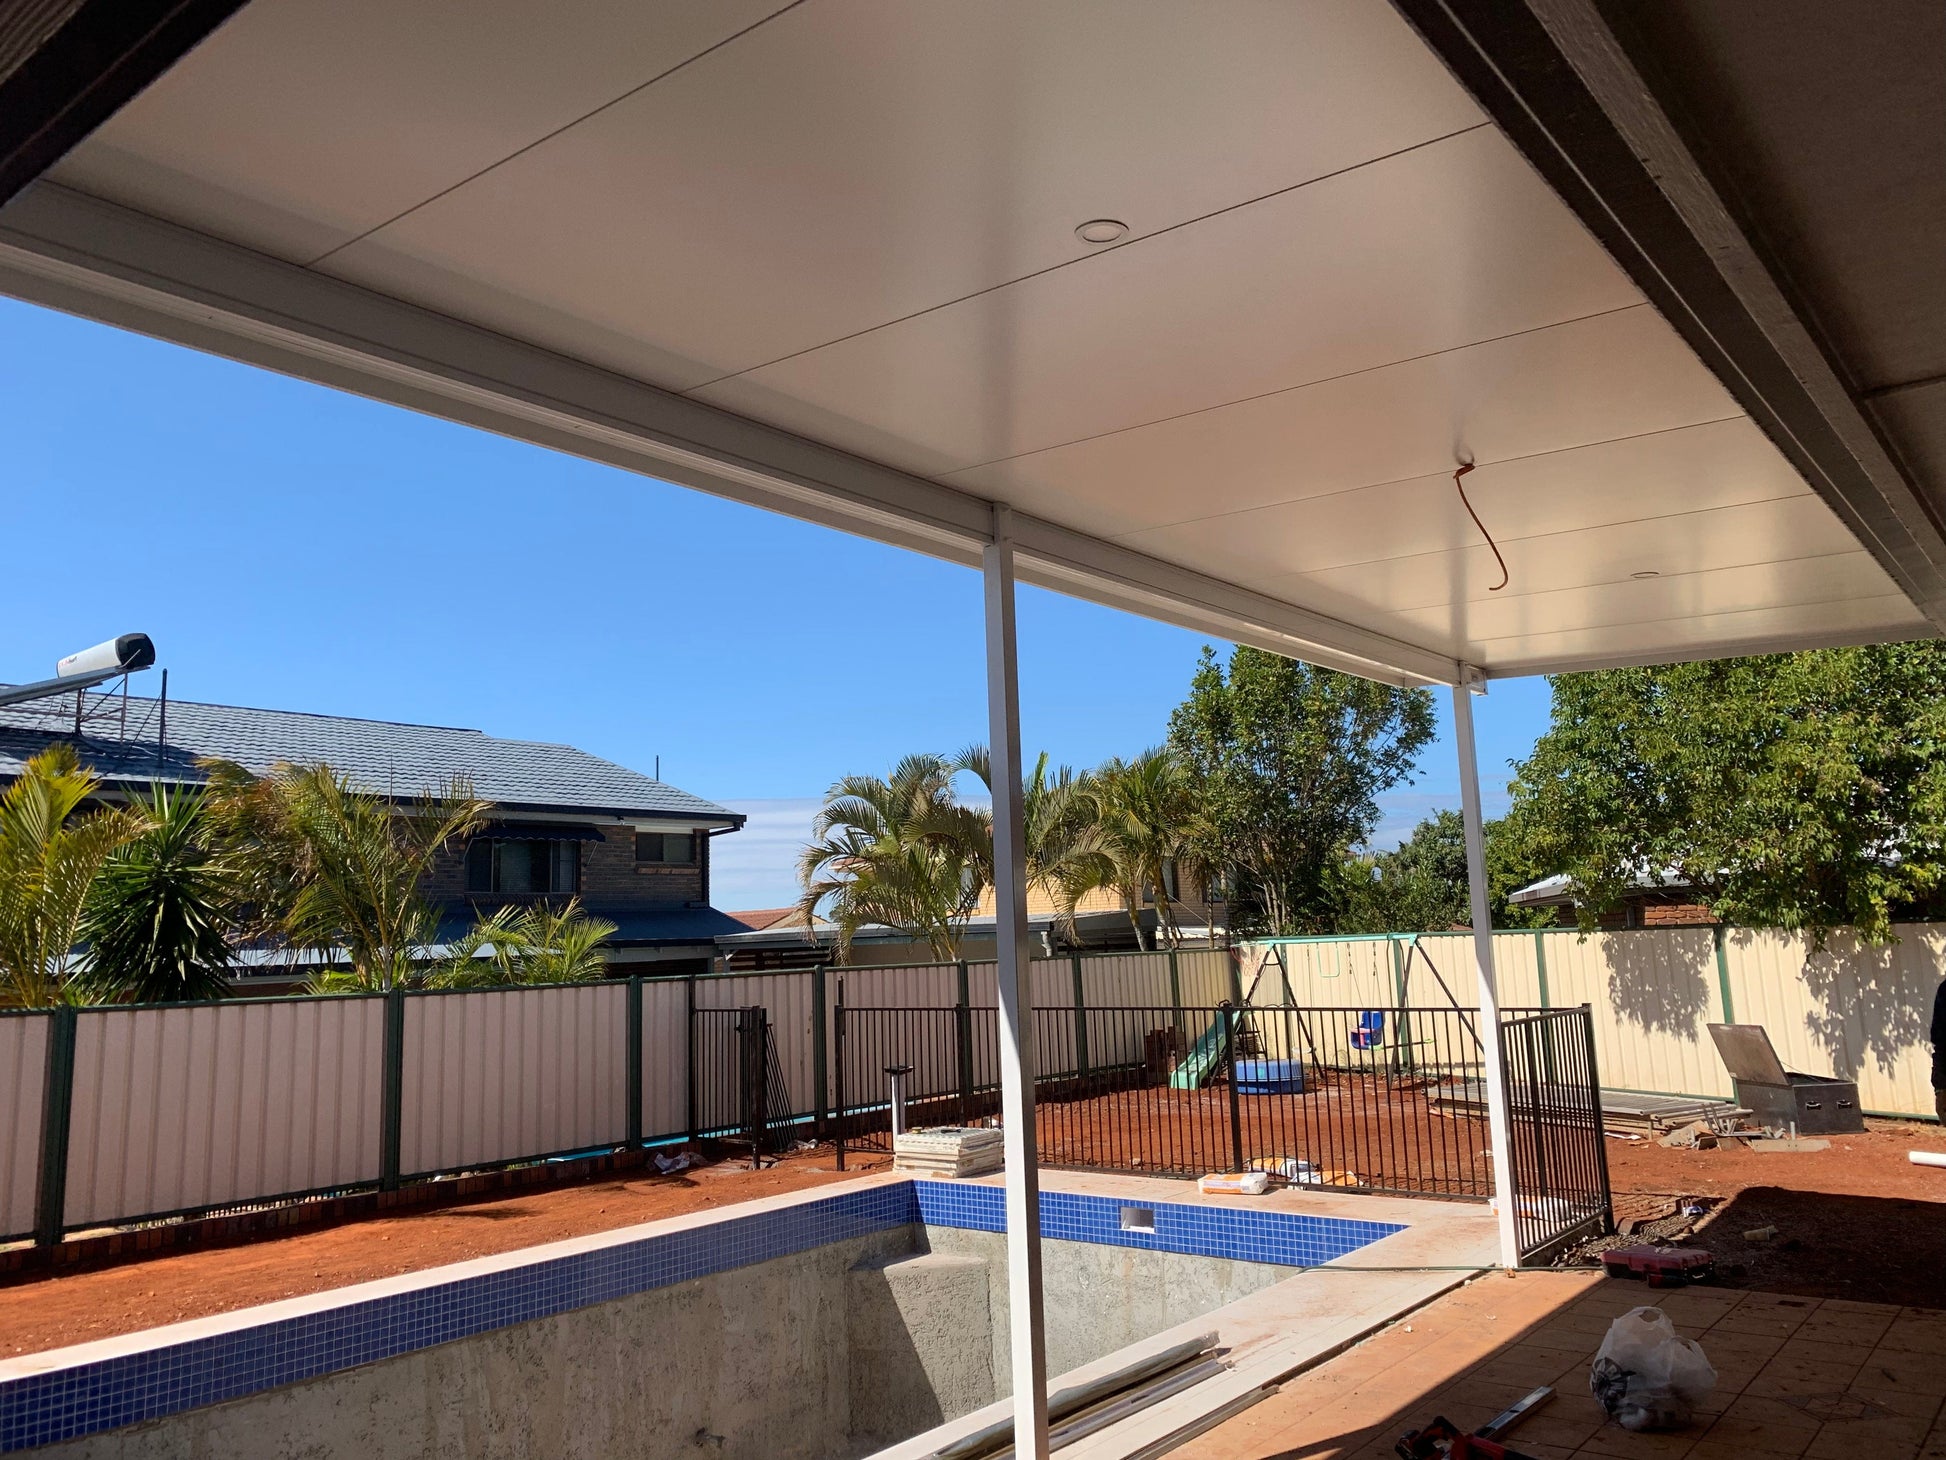 SmartKits Australia Insulated Flyover Roof- 9m (L) x 3m (W).